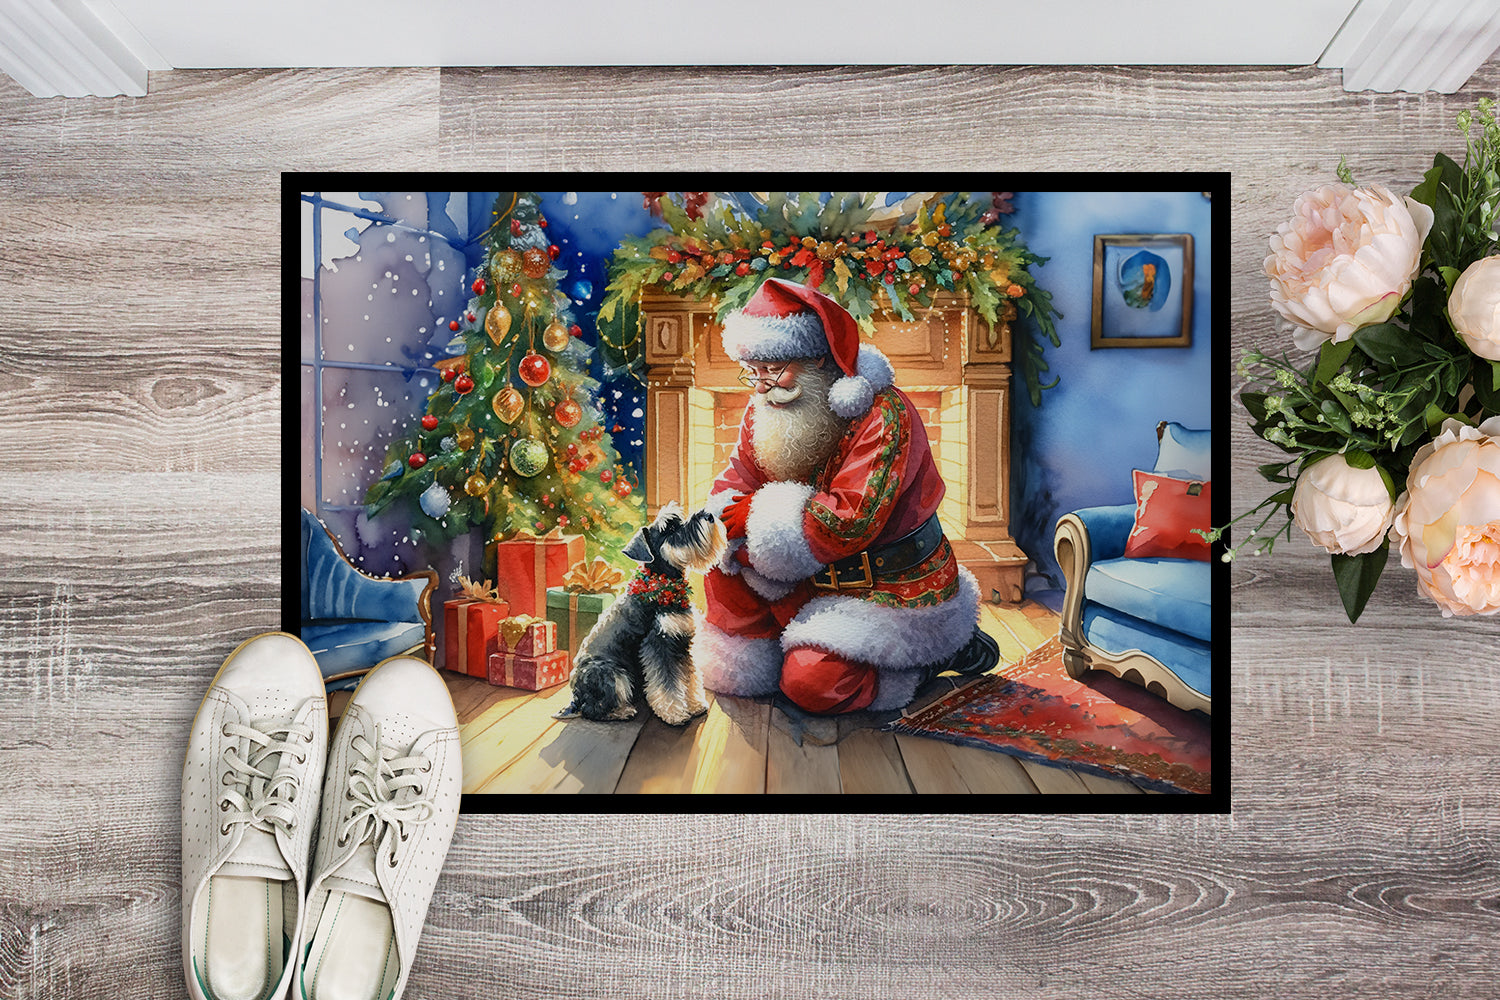 Buy this Schnauzer and Santa Claus Doormat